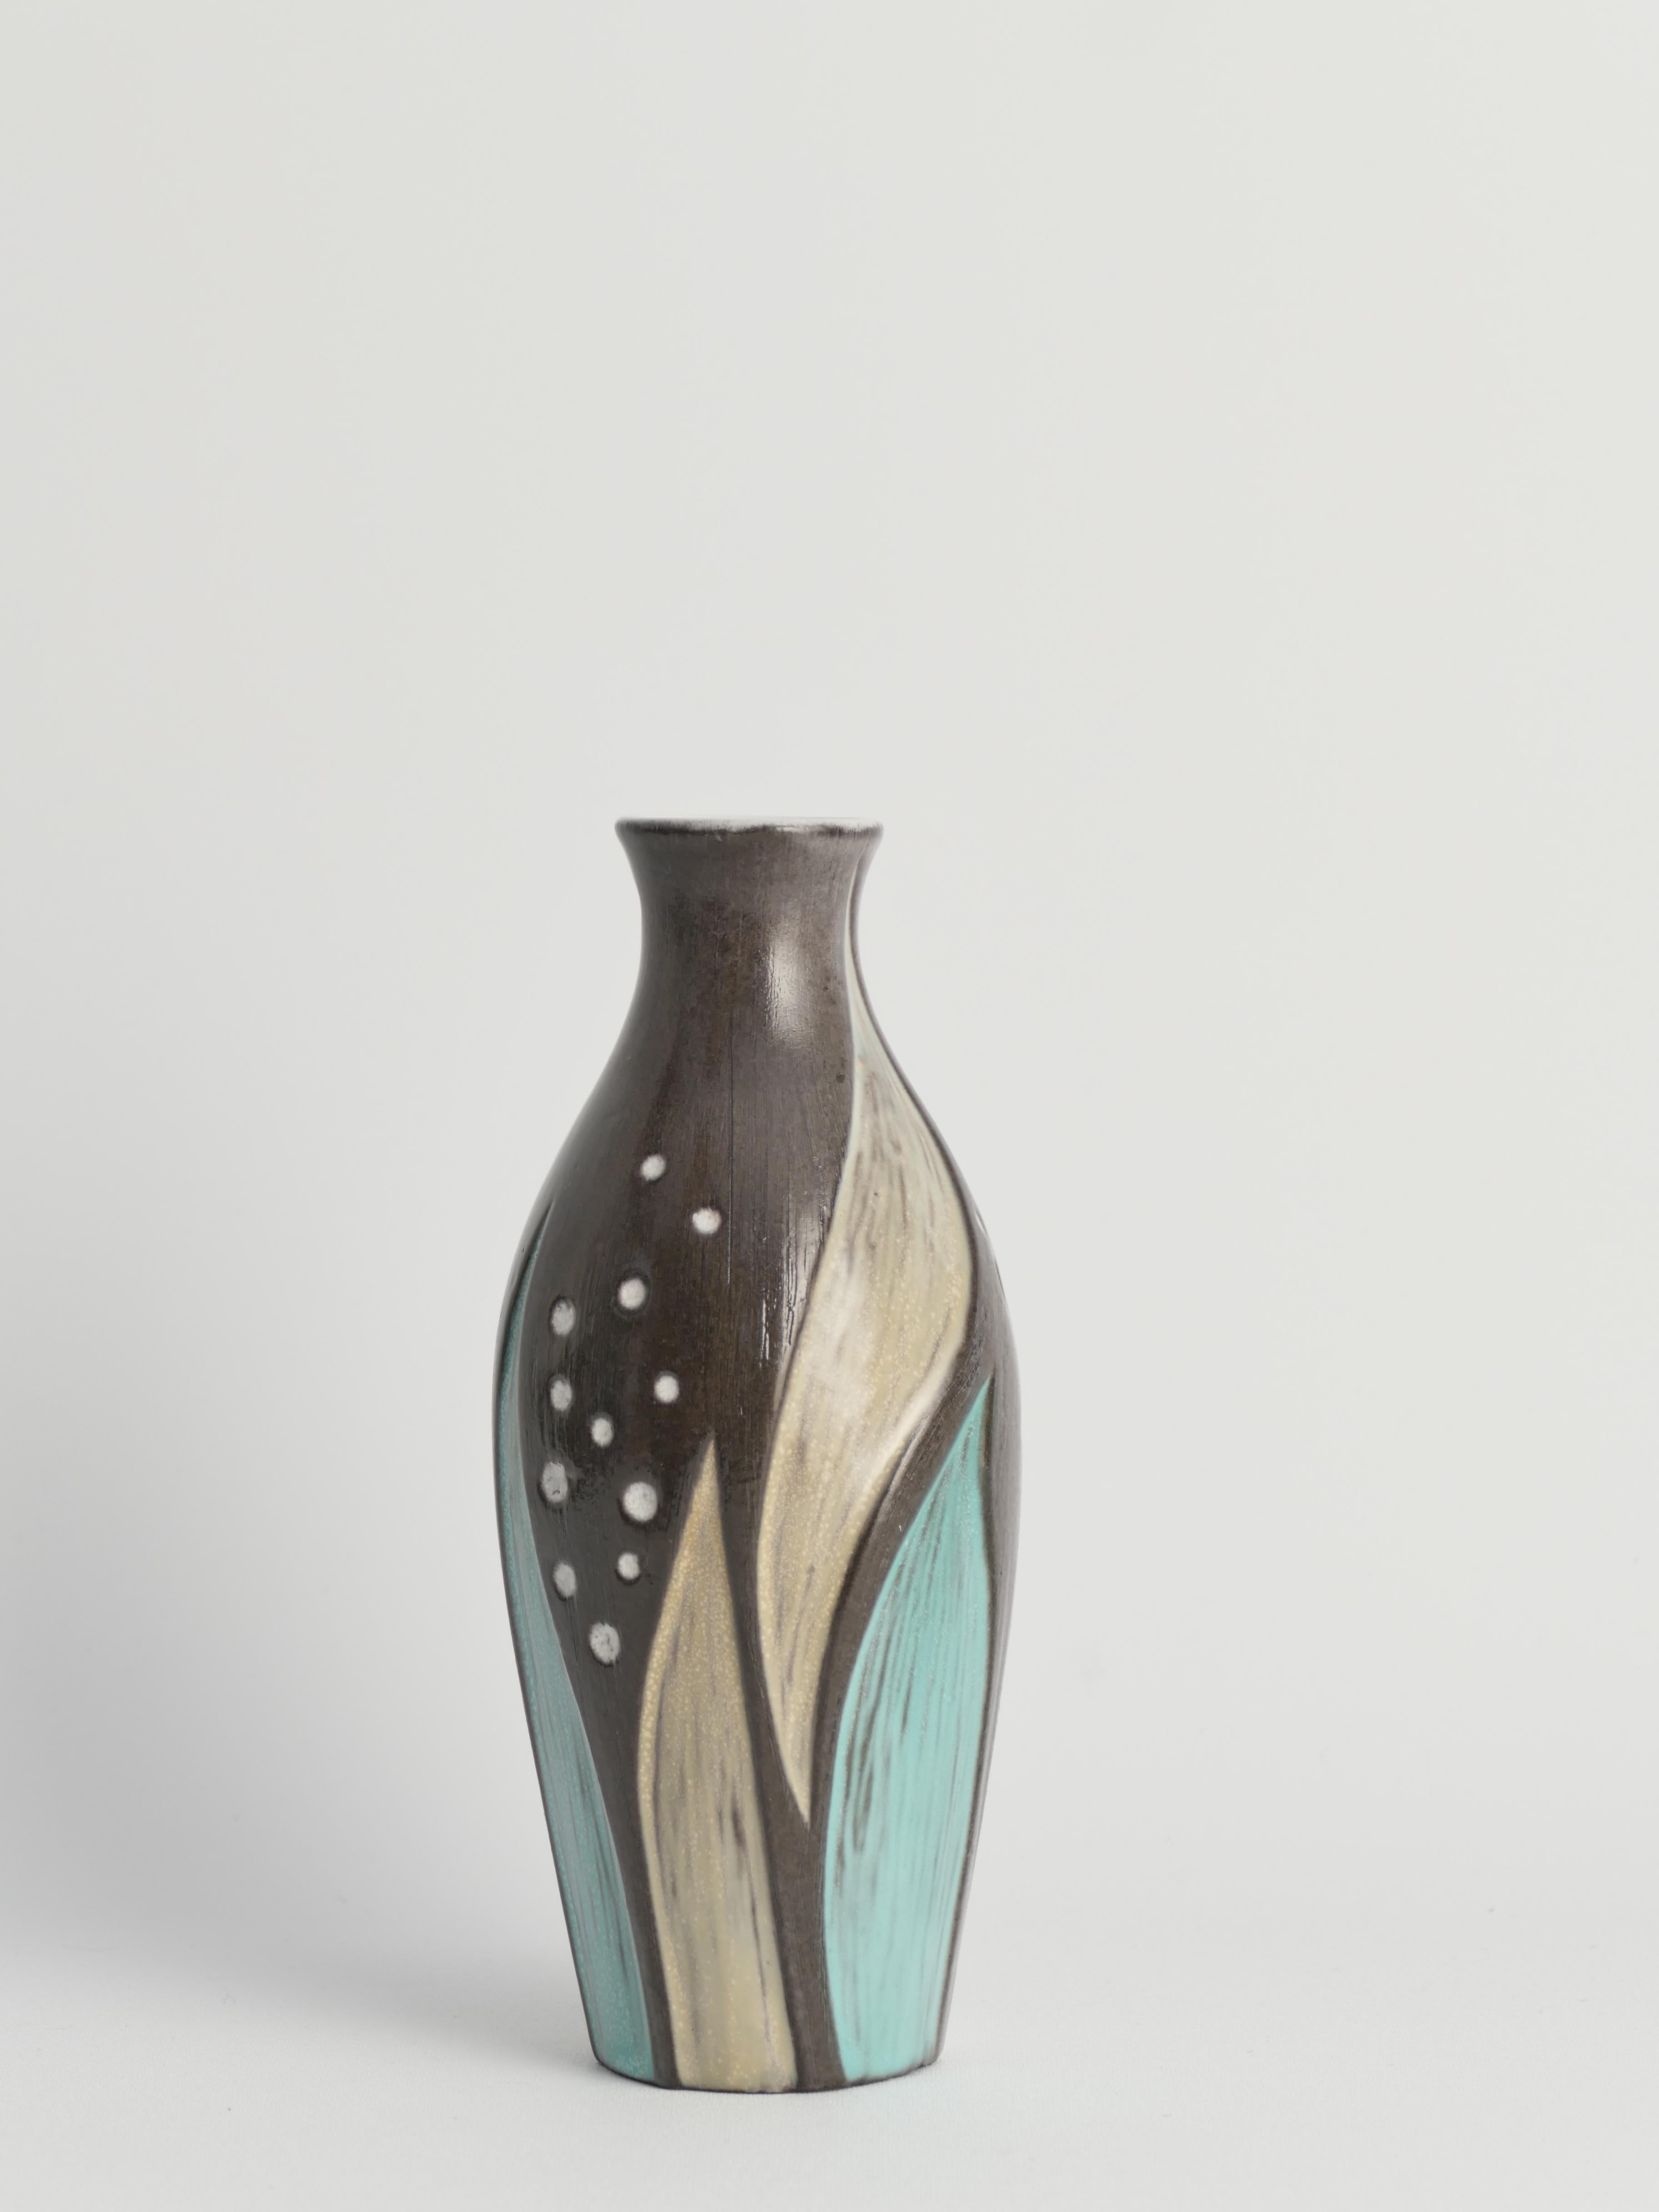 Glazed Ceramic Vase with Seaweed Motif by Mari Simmulson for Upsala Ekeby, Sweden 1950s For Sale